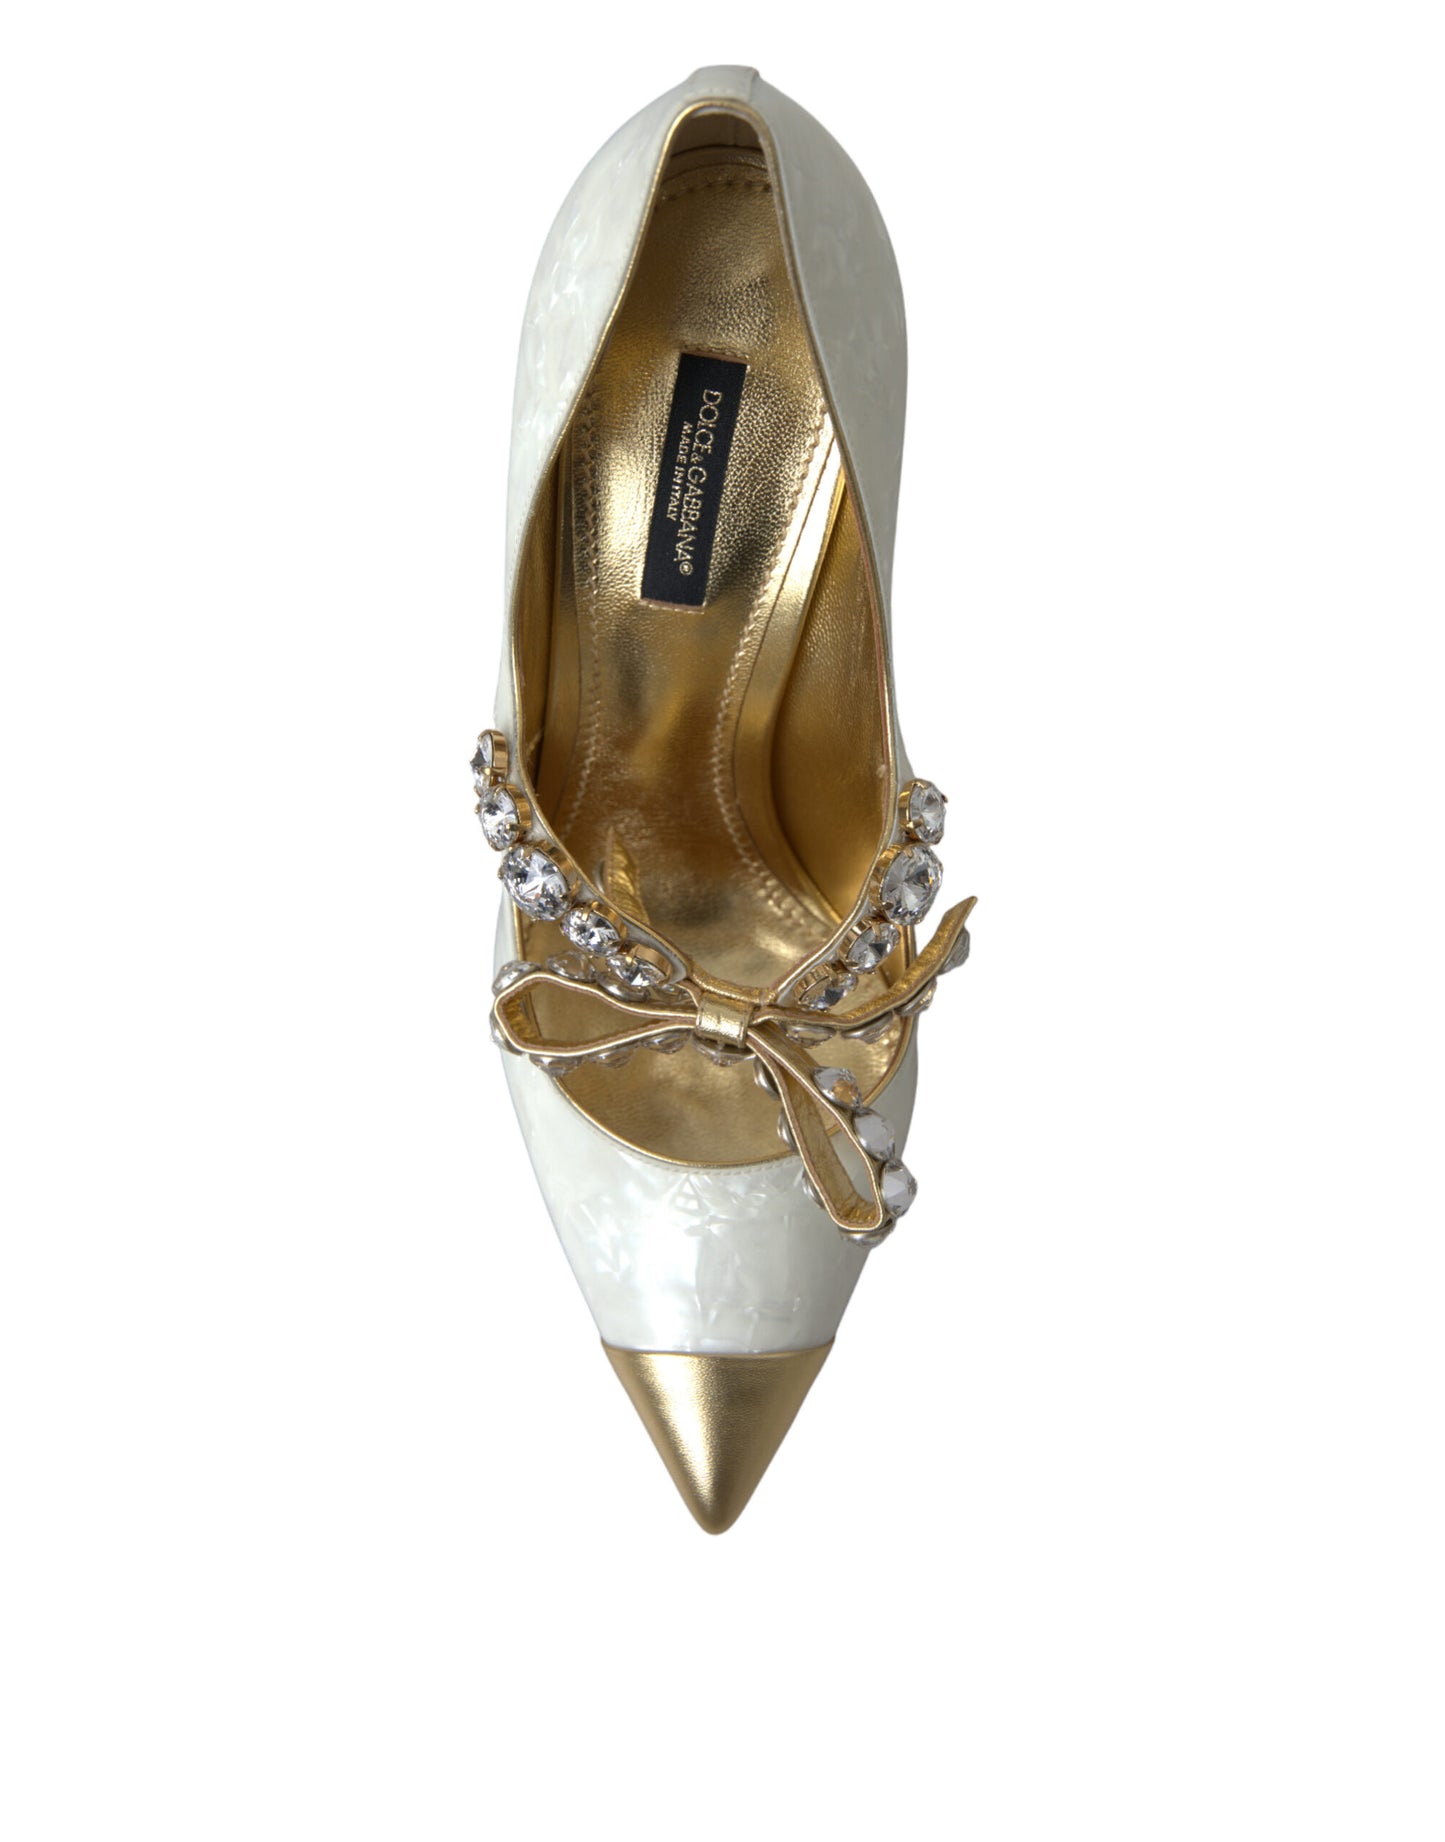 Dolce & Gabbana Elegant White Patent Crystal Bow Heels